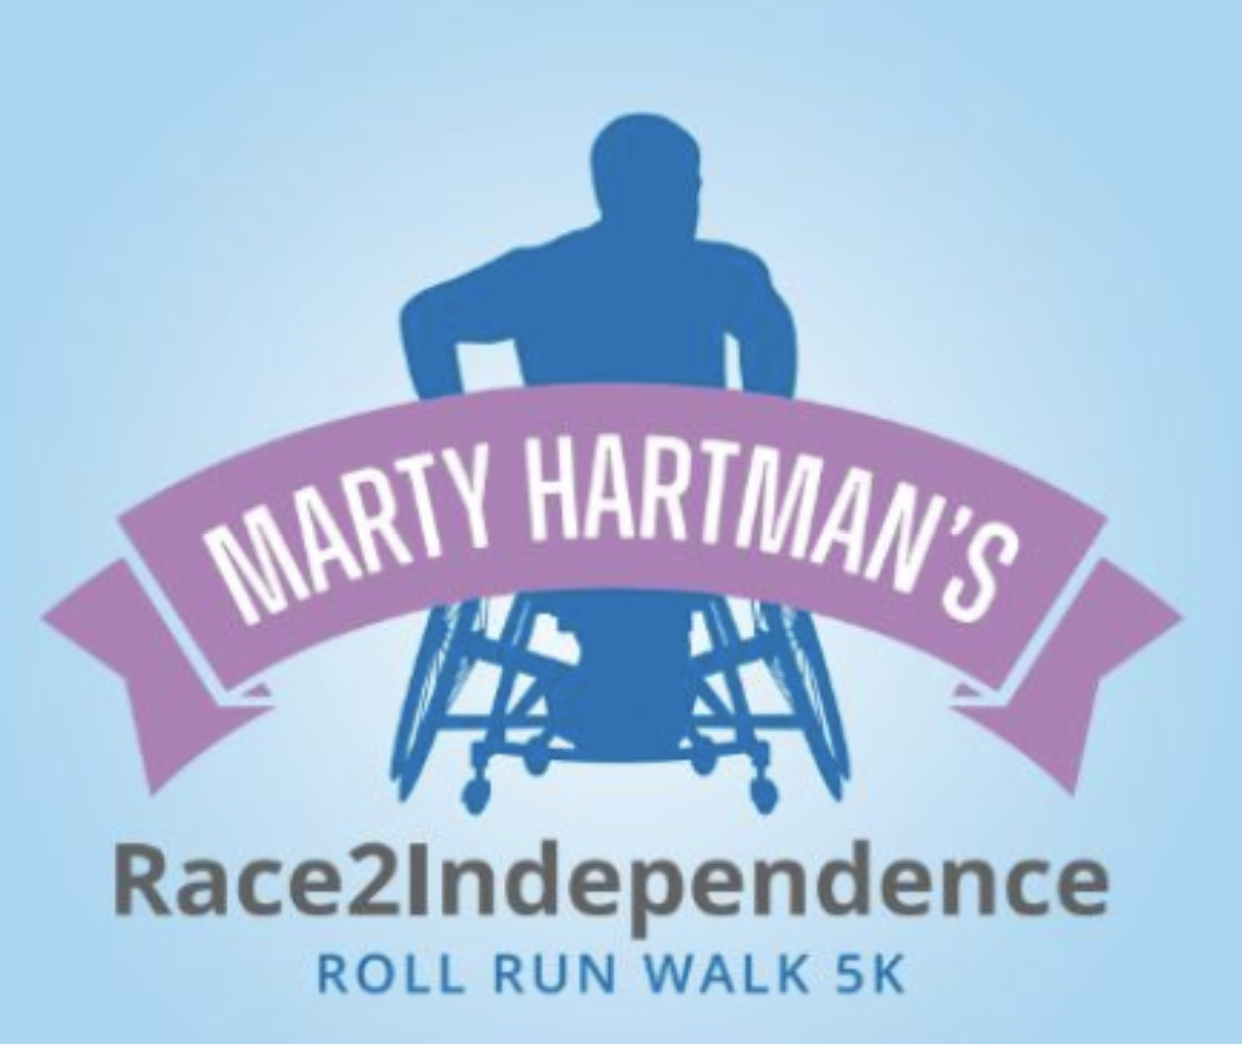 Marty Hartman’s Race2Independence Roll Run Walk 5K logo on RaceRaves